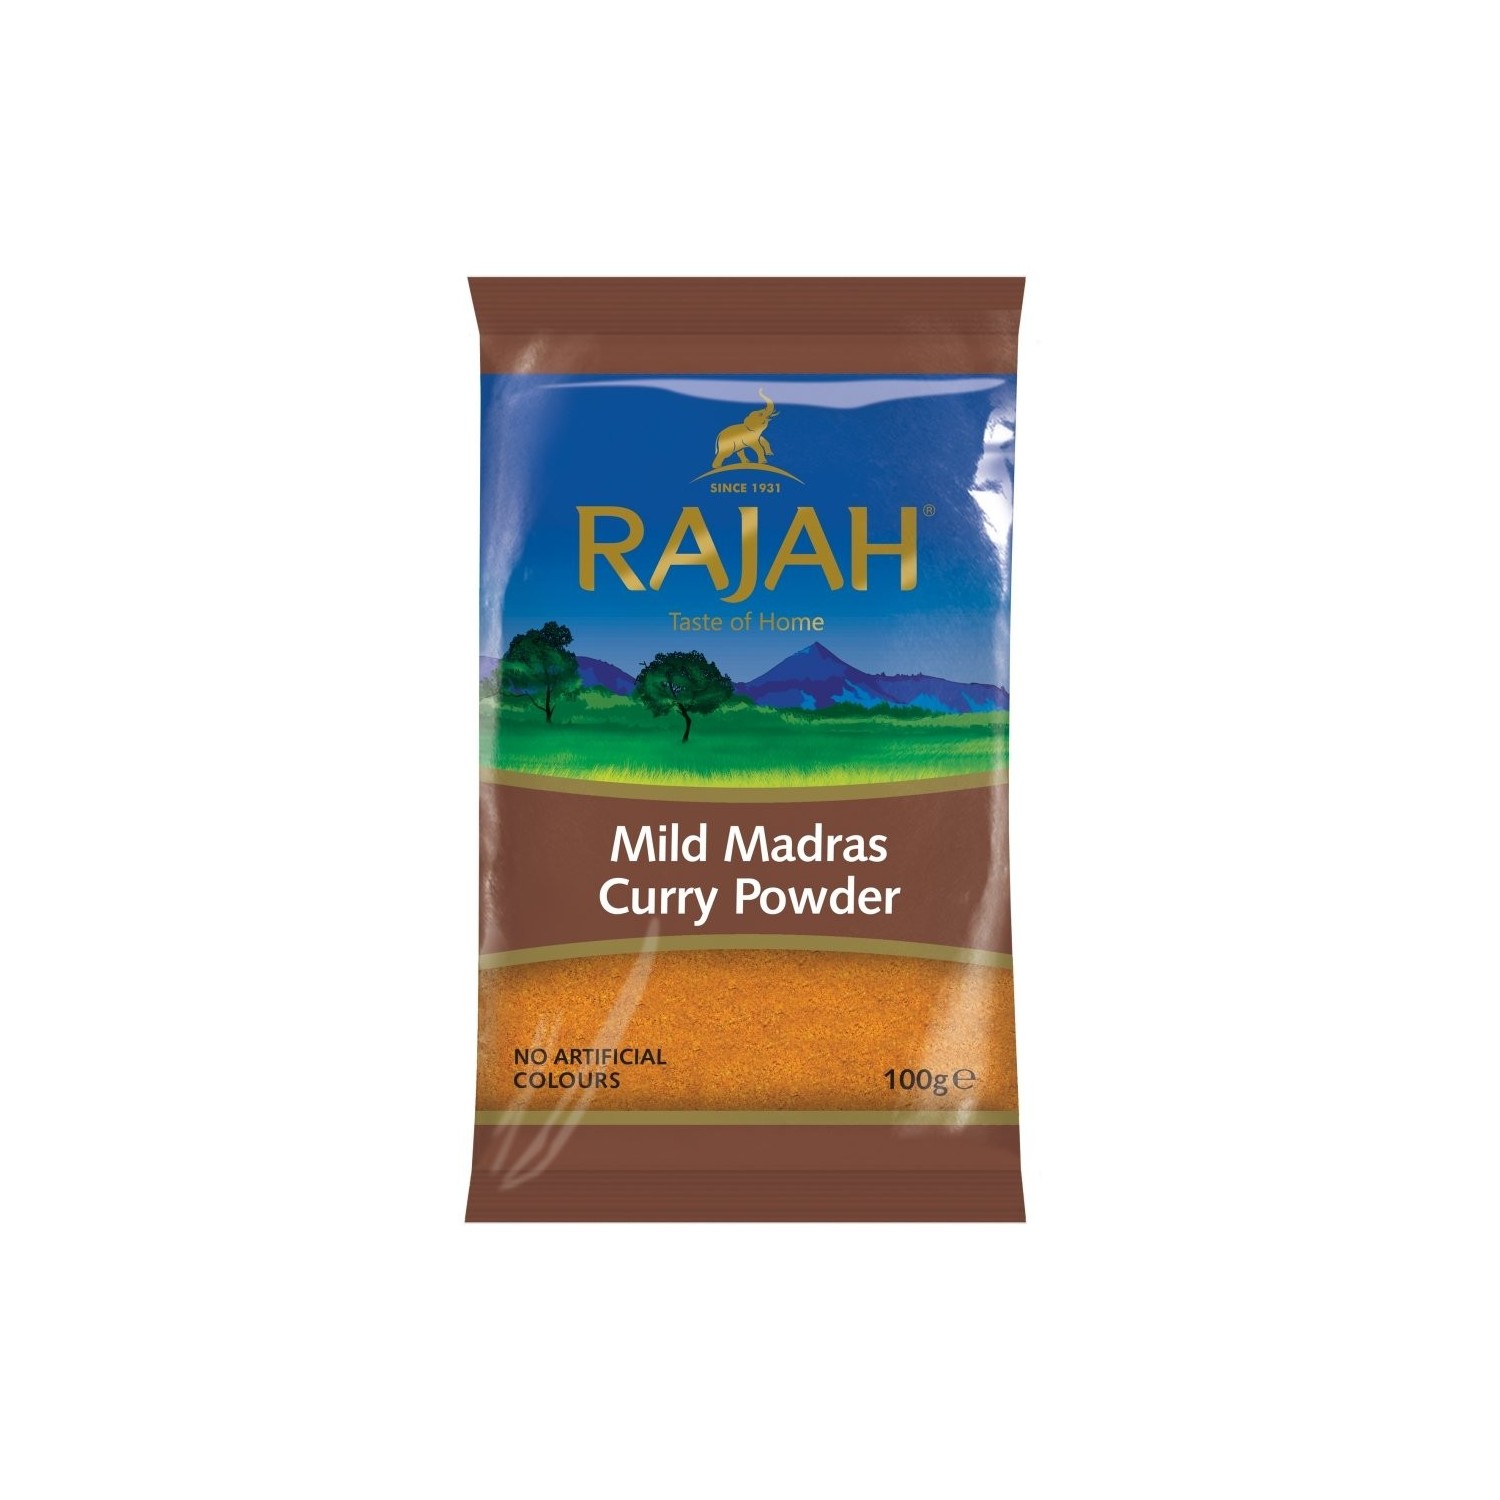 Rajah Mild Madras 100g Curry Powder - 5015821145026